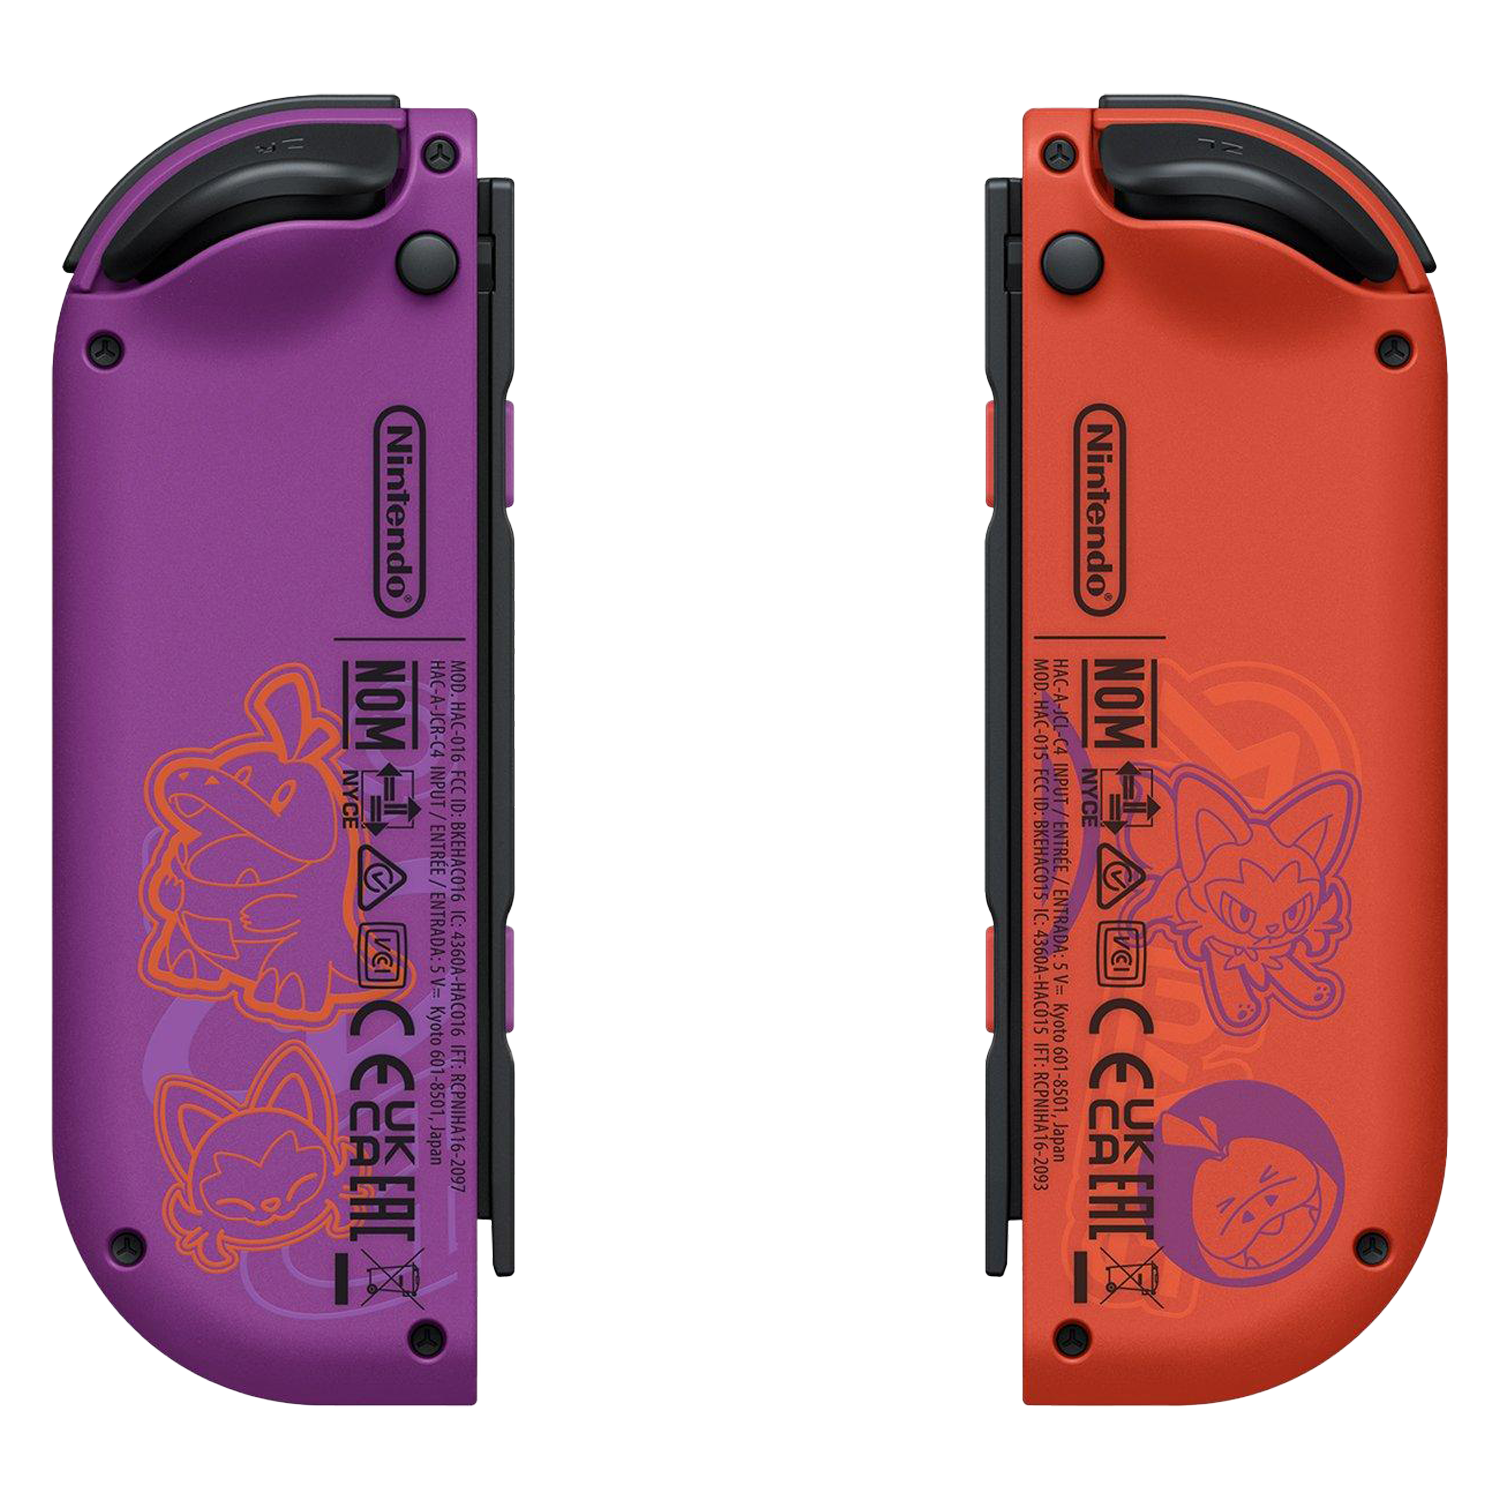 Console Nintendo Switch OLED 64GB Pokemon Scarlet e Violet Edition Japan - (HEG-S-KEAAA) (Caixa Danificada)
